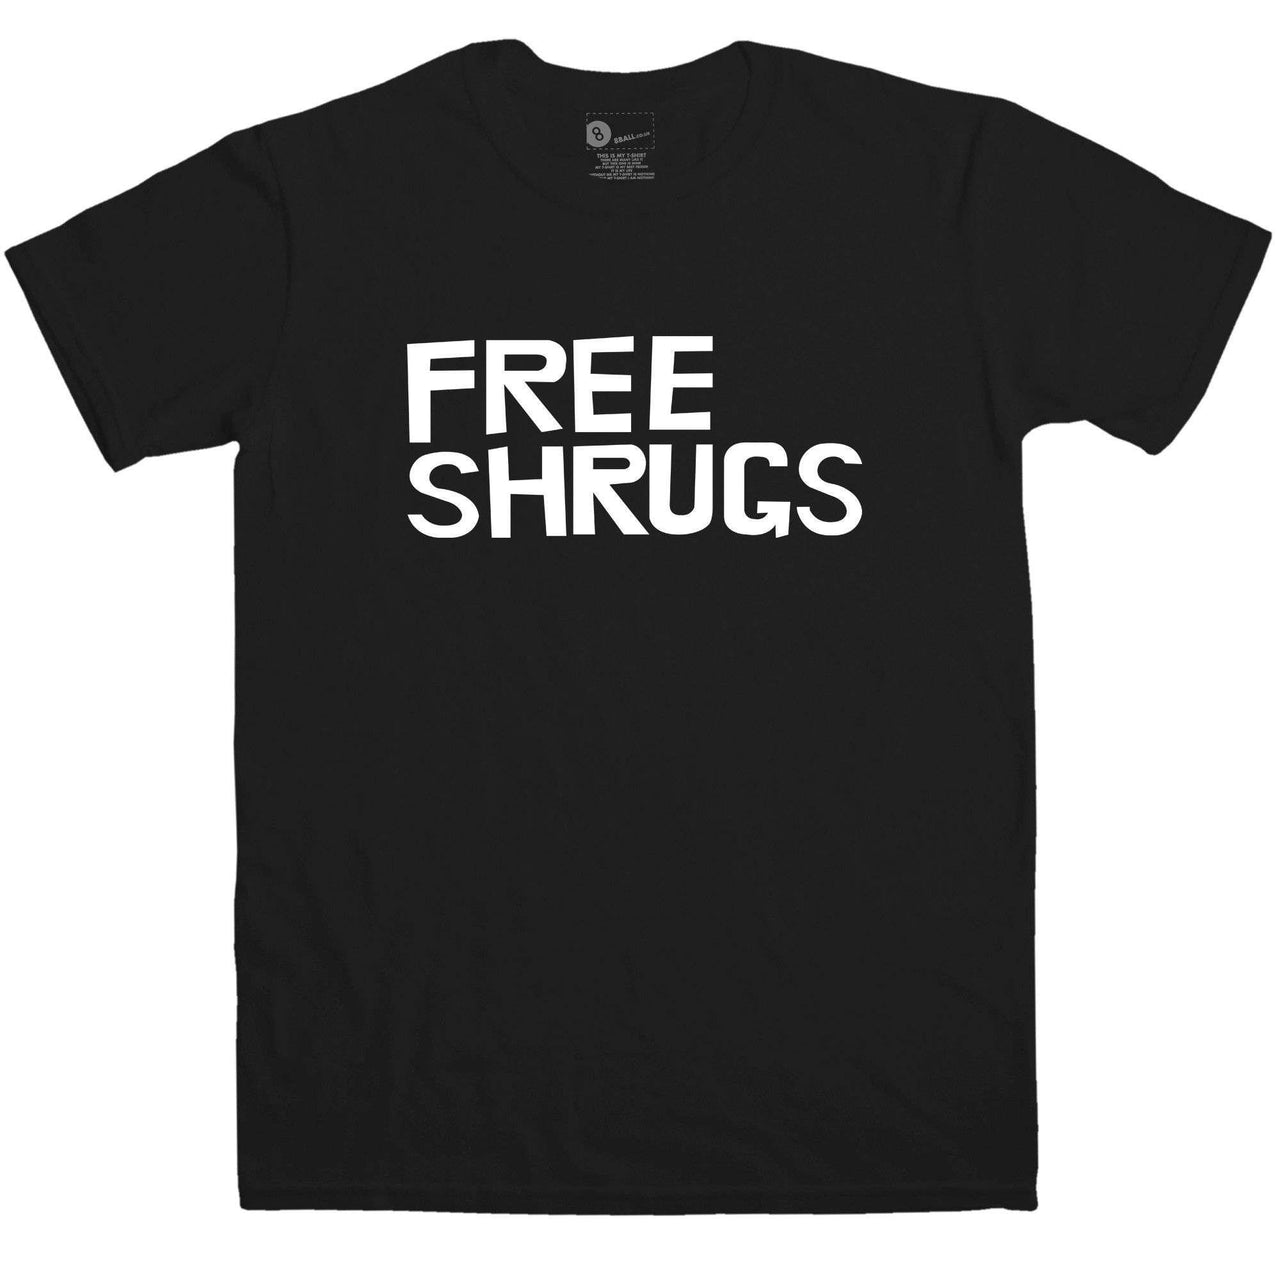 Free Shrugs T-Shirt For Men 8Ball